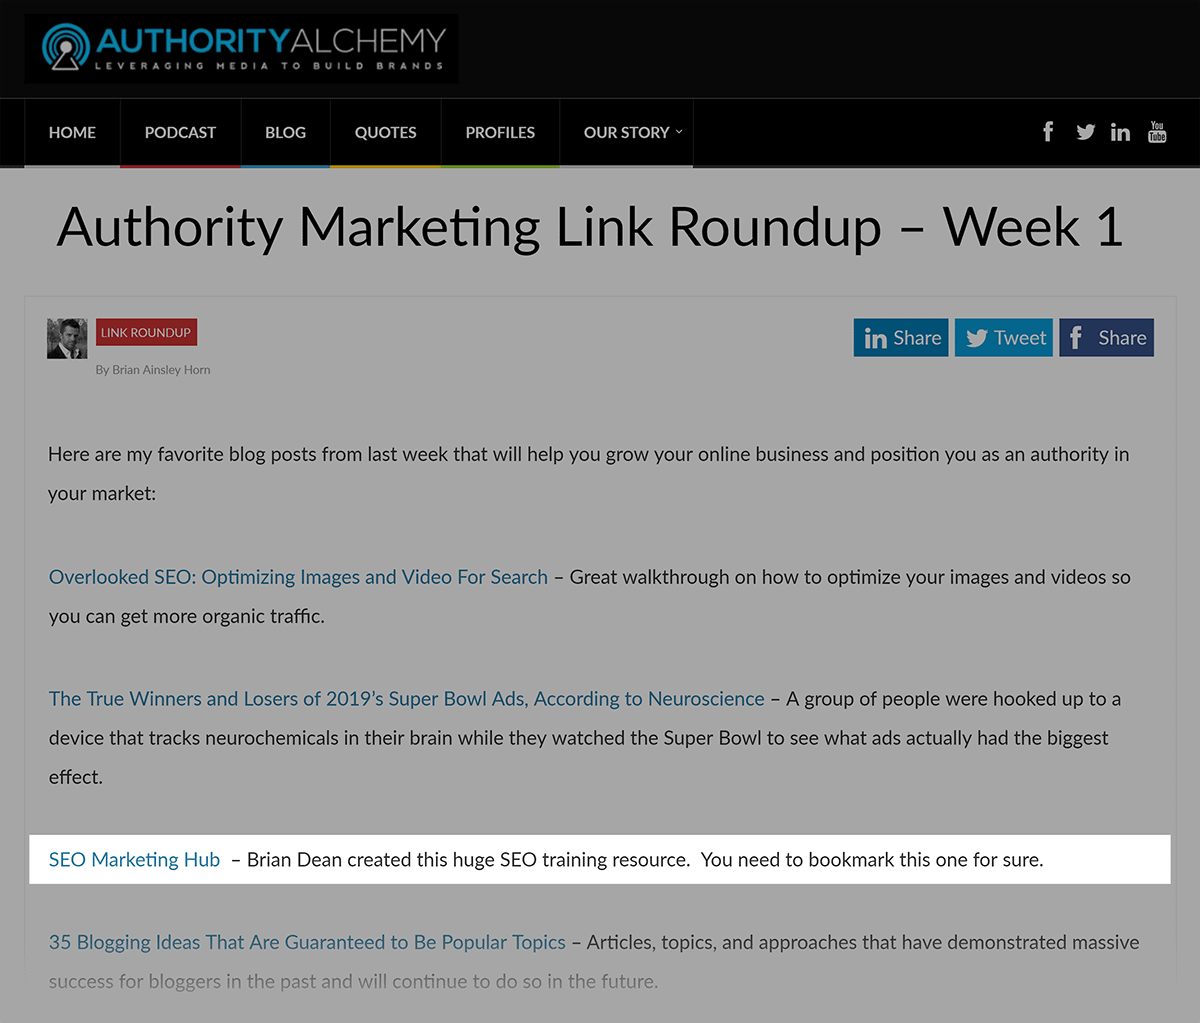 SEO Marketing Hub - Backlink from AuthorityAlchemy&#039;s link roundup